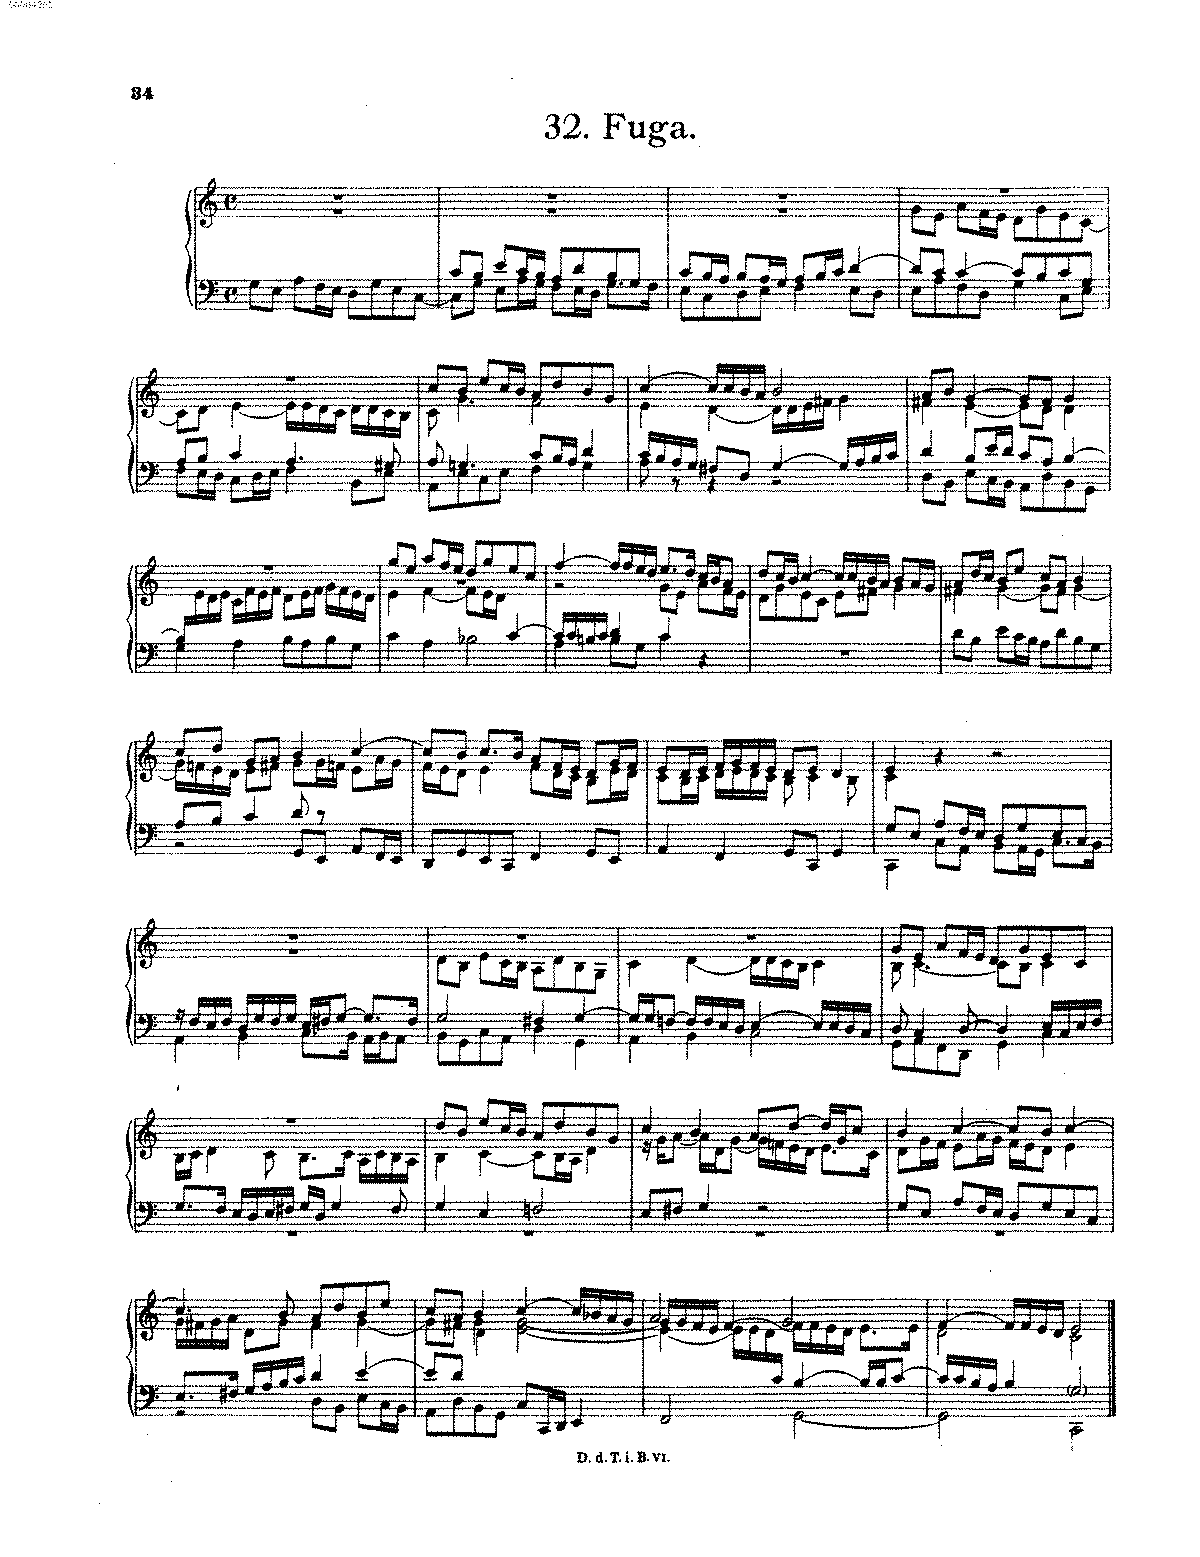 Fugue in C major, P.147 (Pachelbel, Johann) - IMSLP